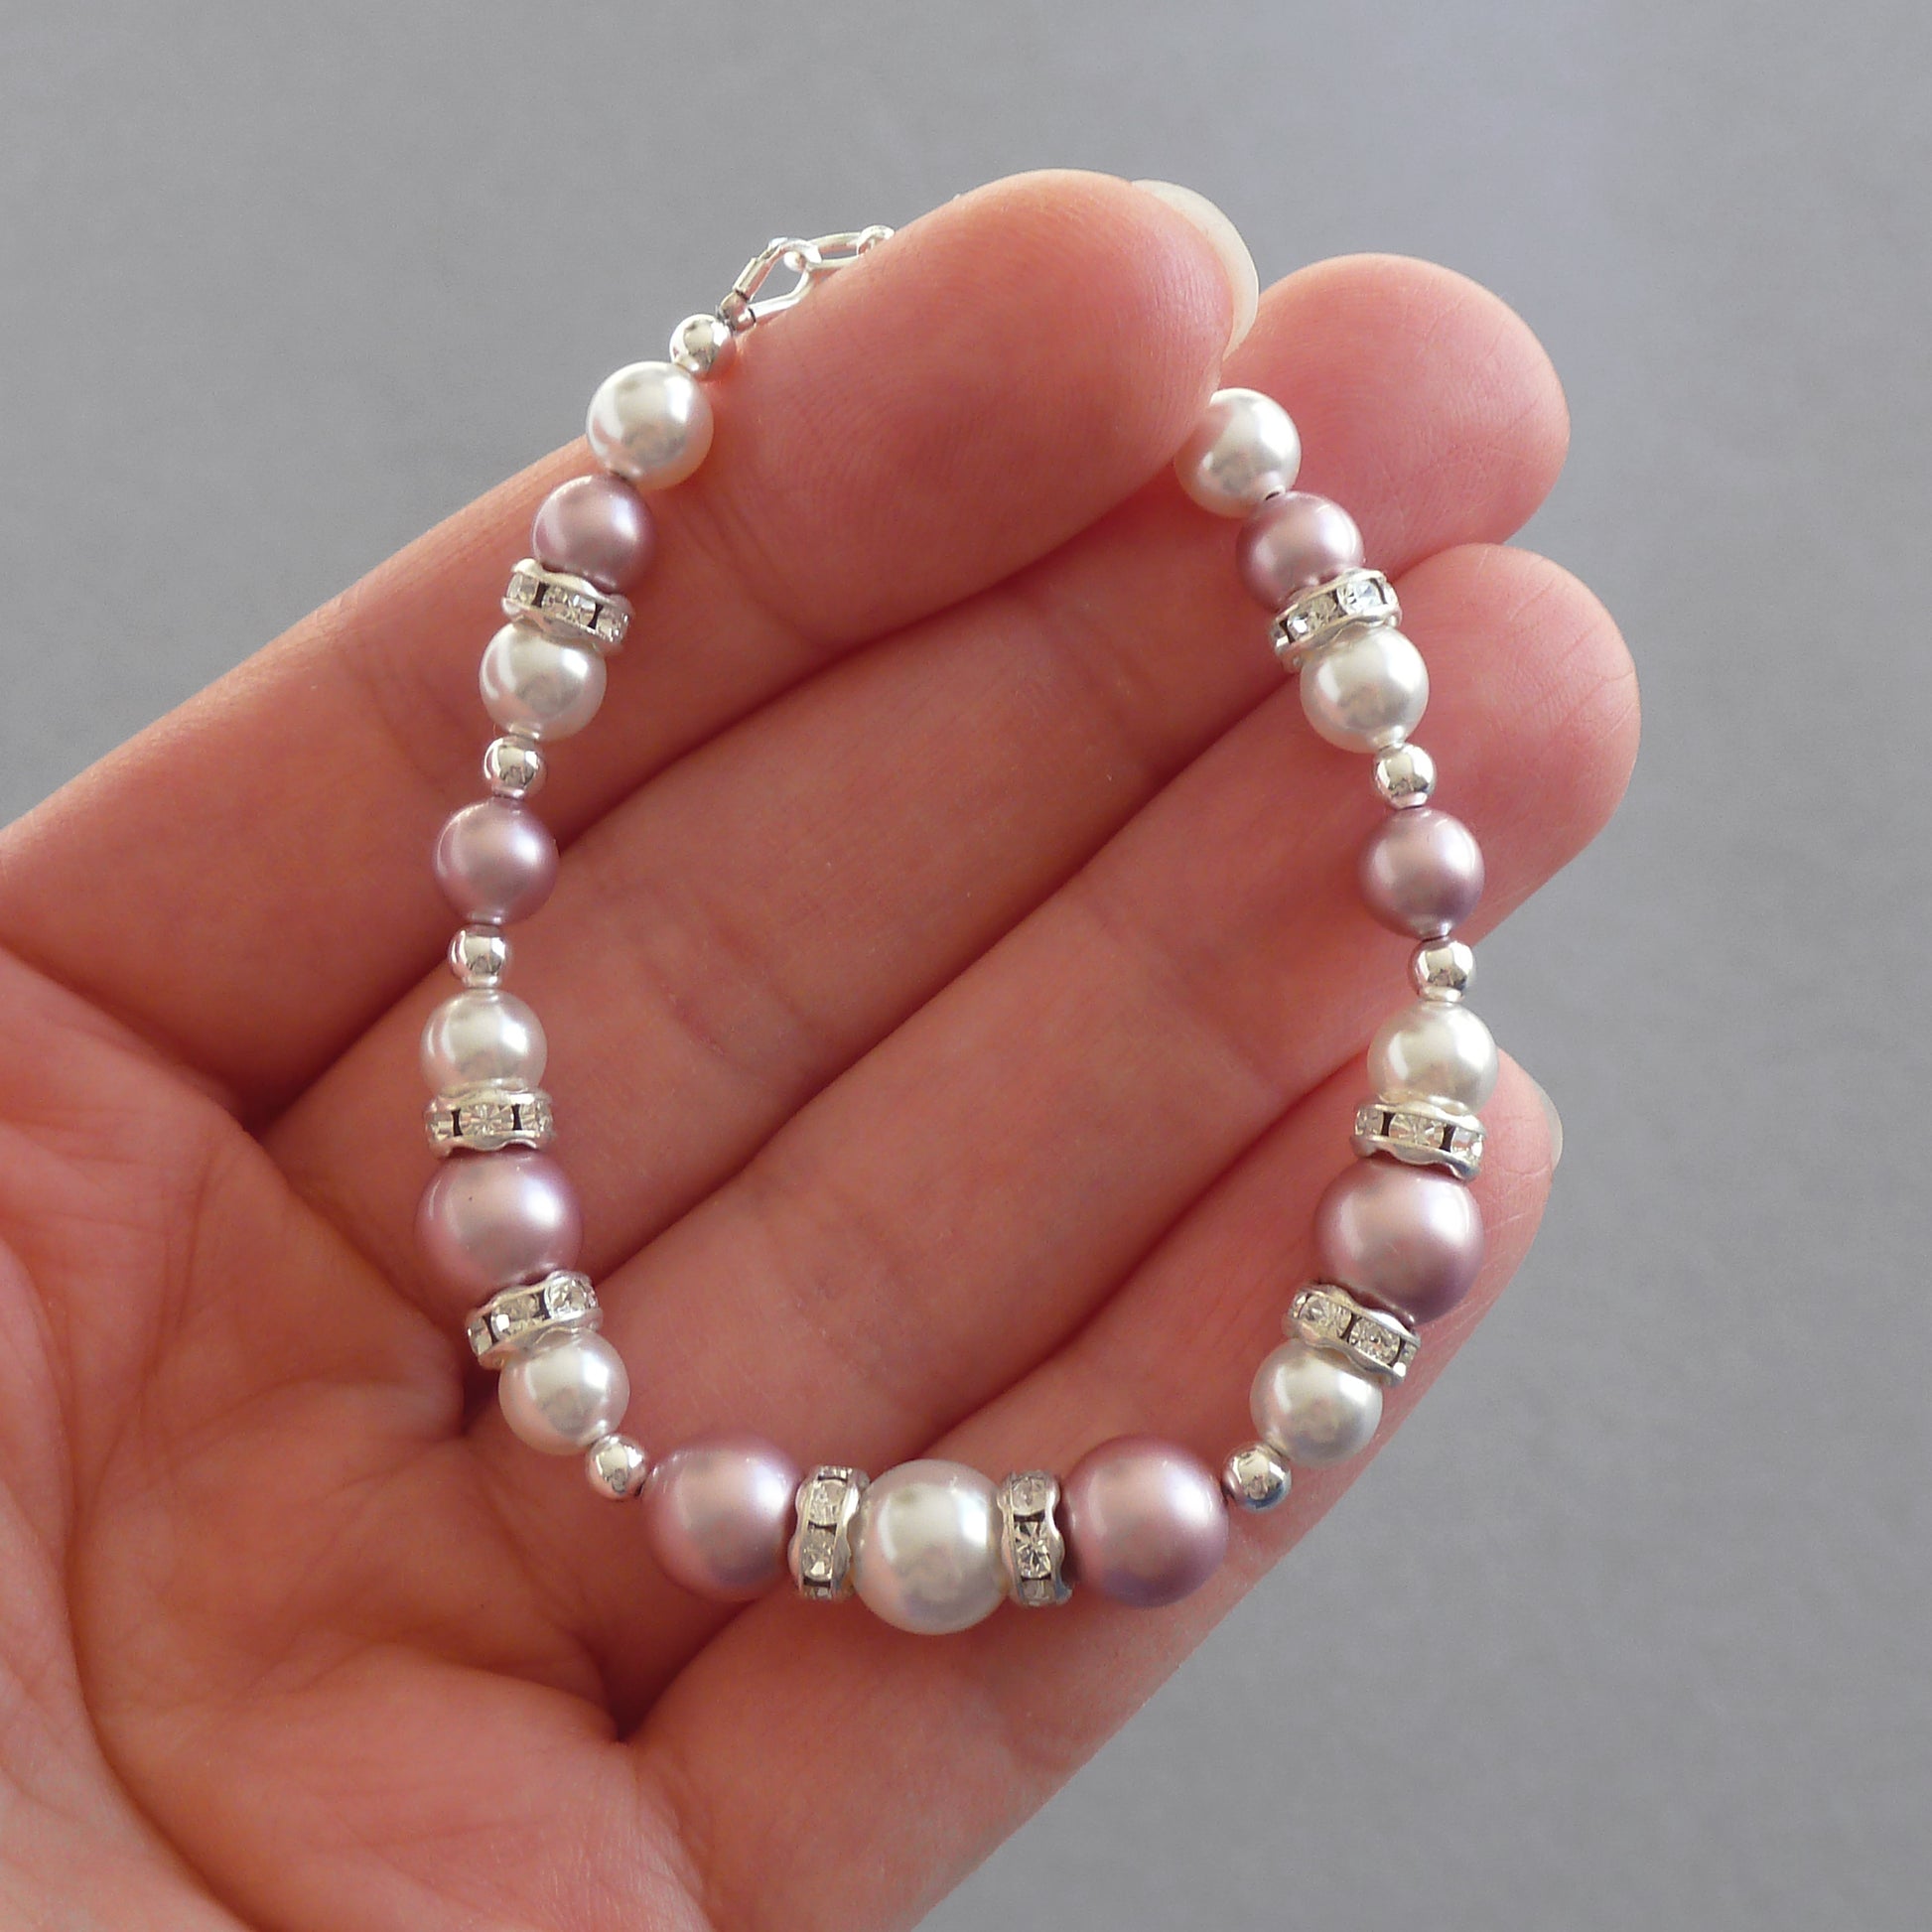 Powder rose and white pearl bracelet